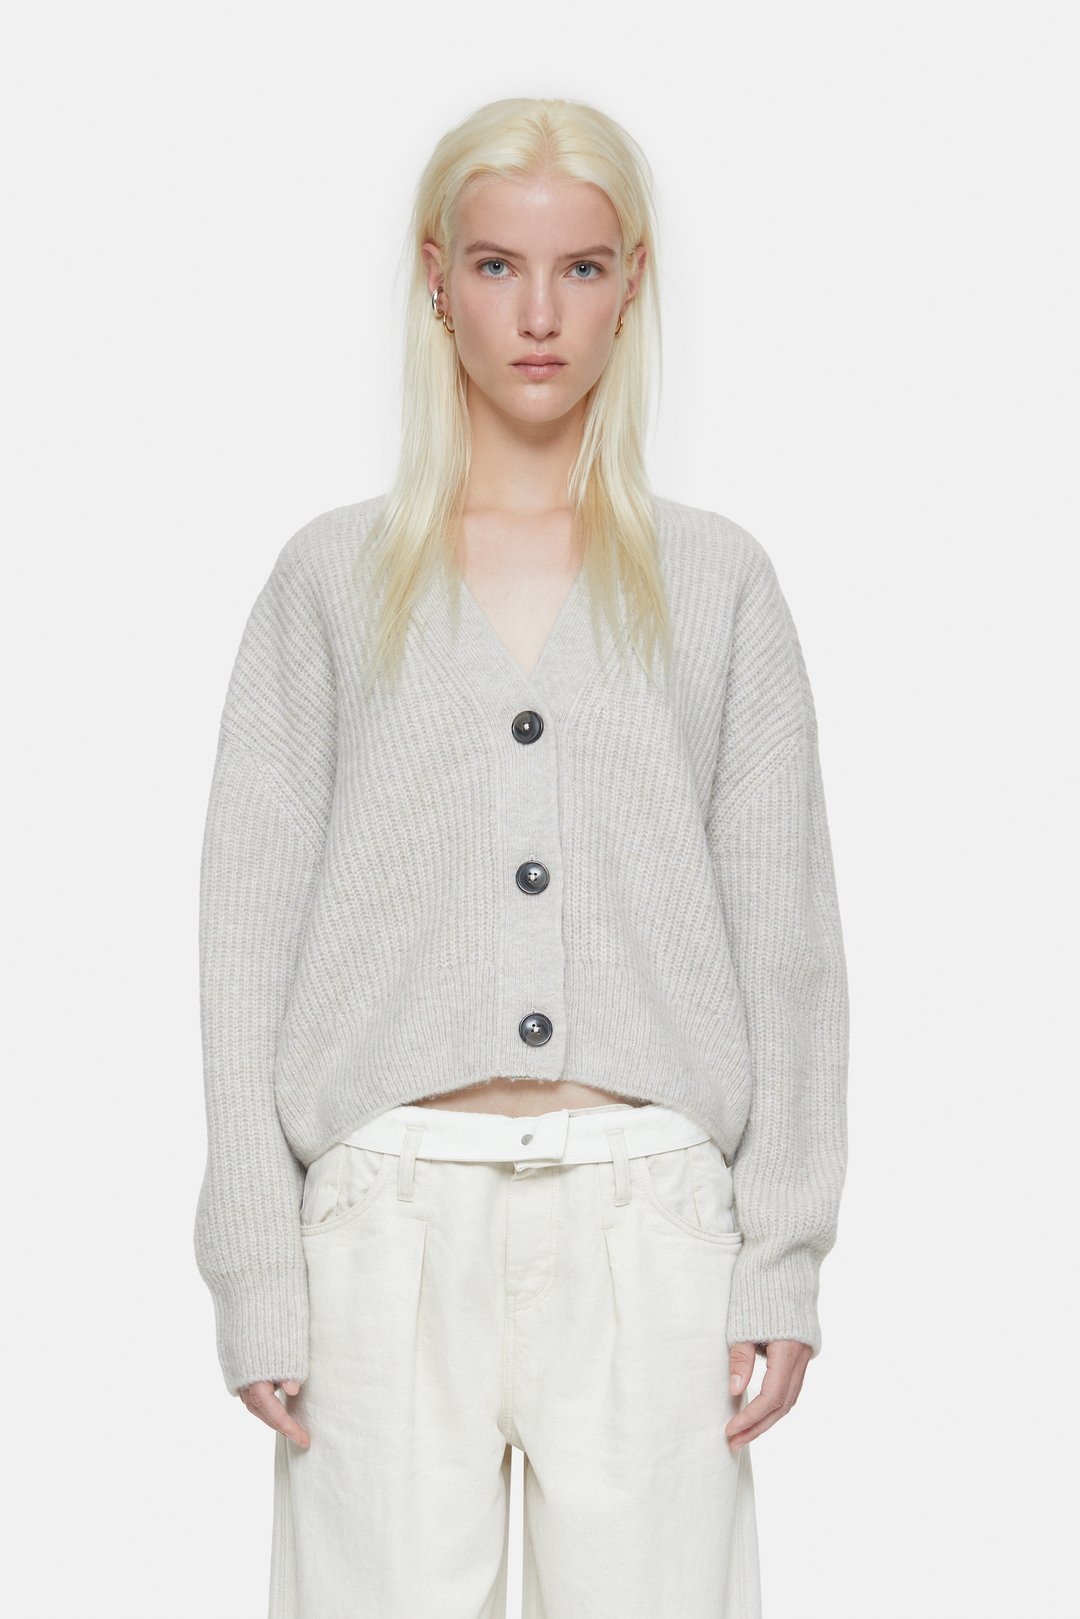 Zara - Jacquard Knit Sweater - Light Beige - Unisex